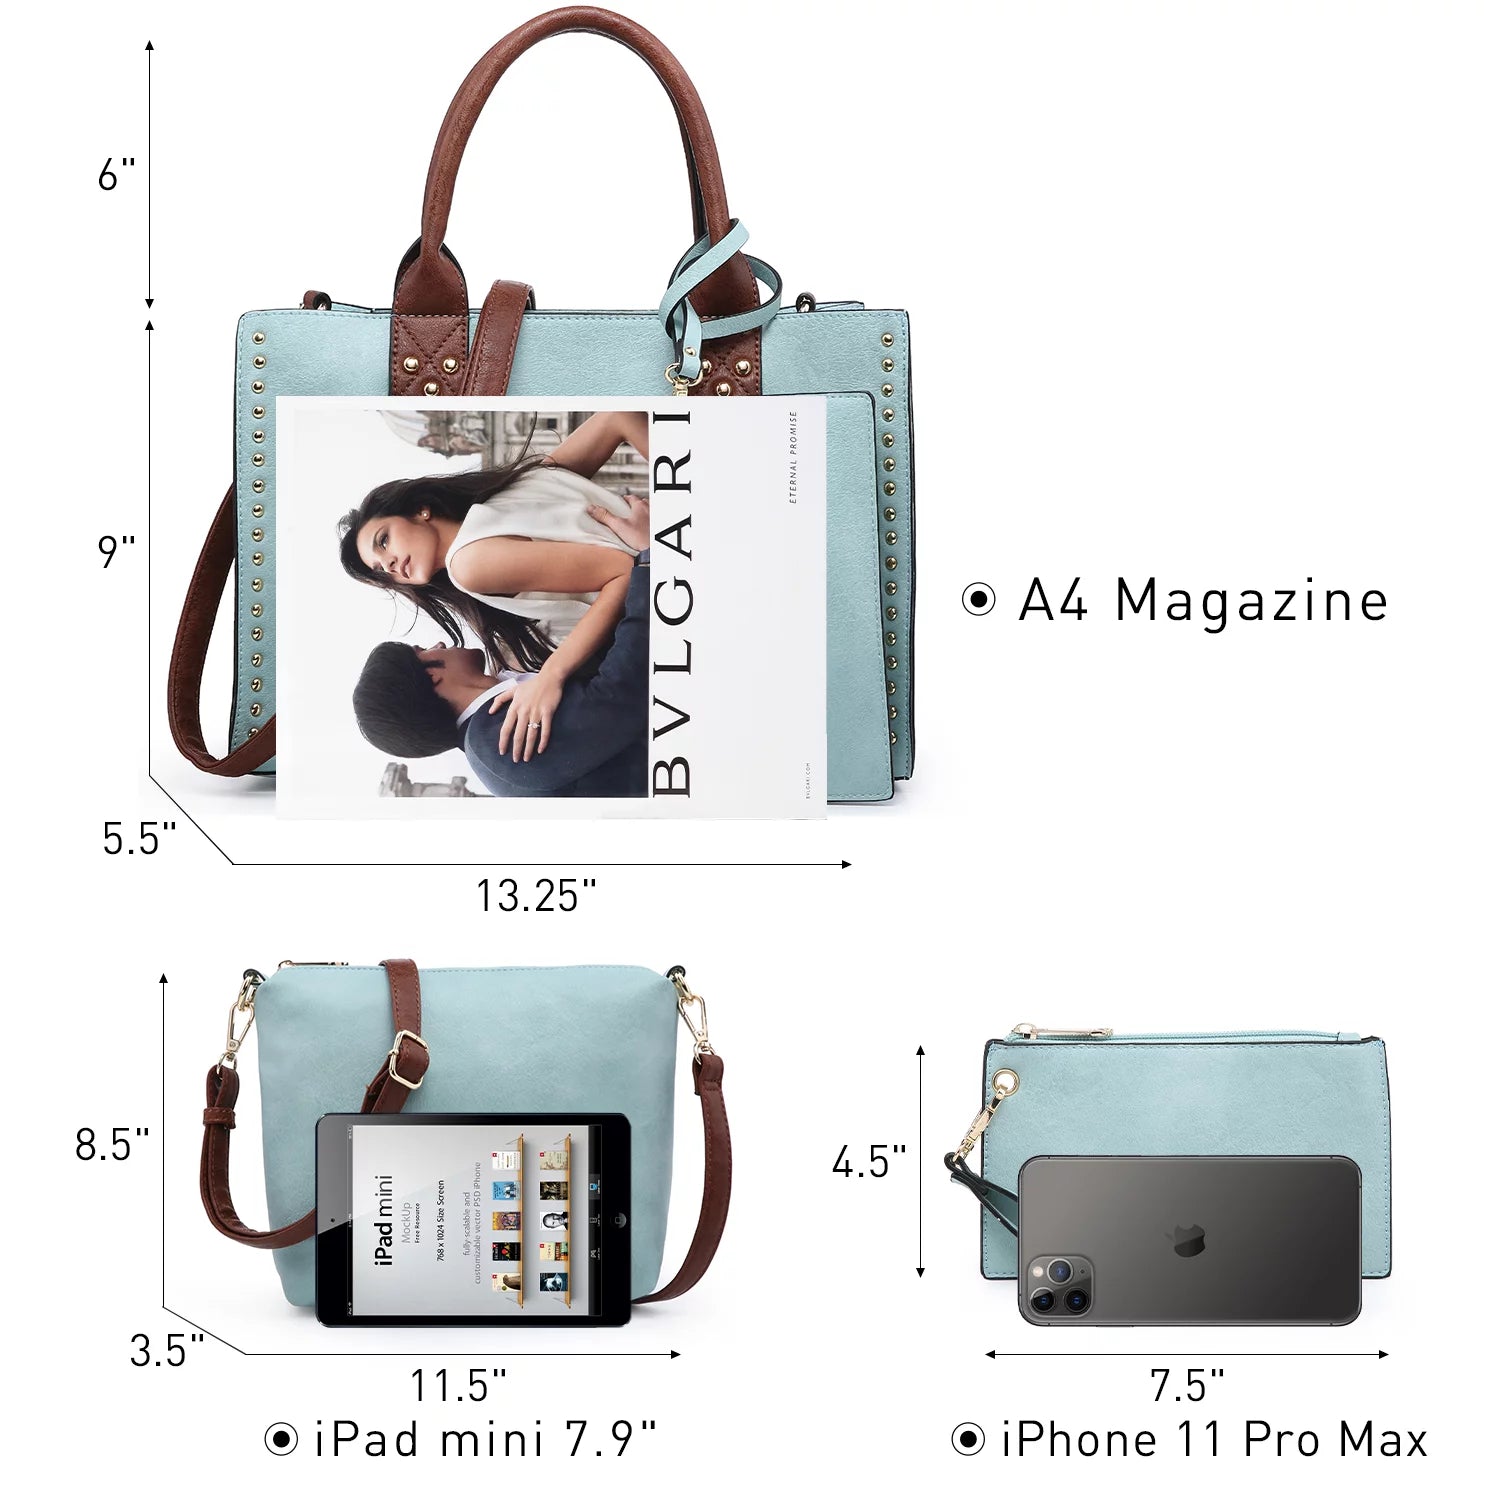 Professional Women's 3-Piece Handbag Set